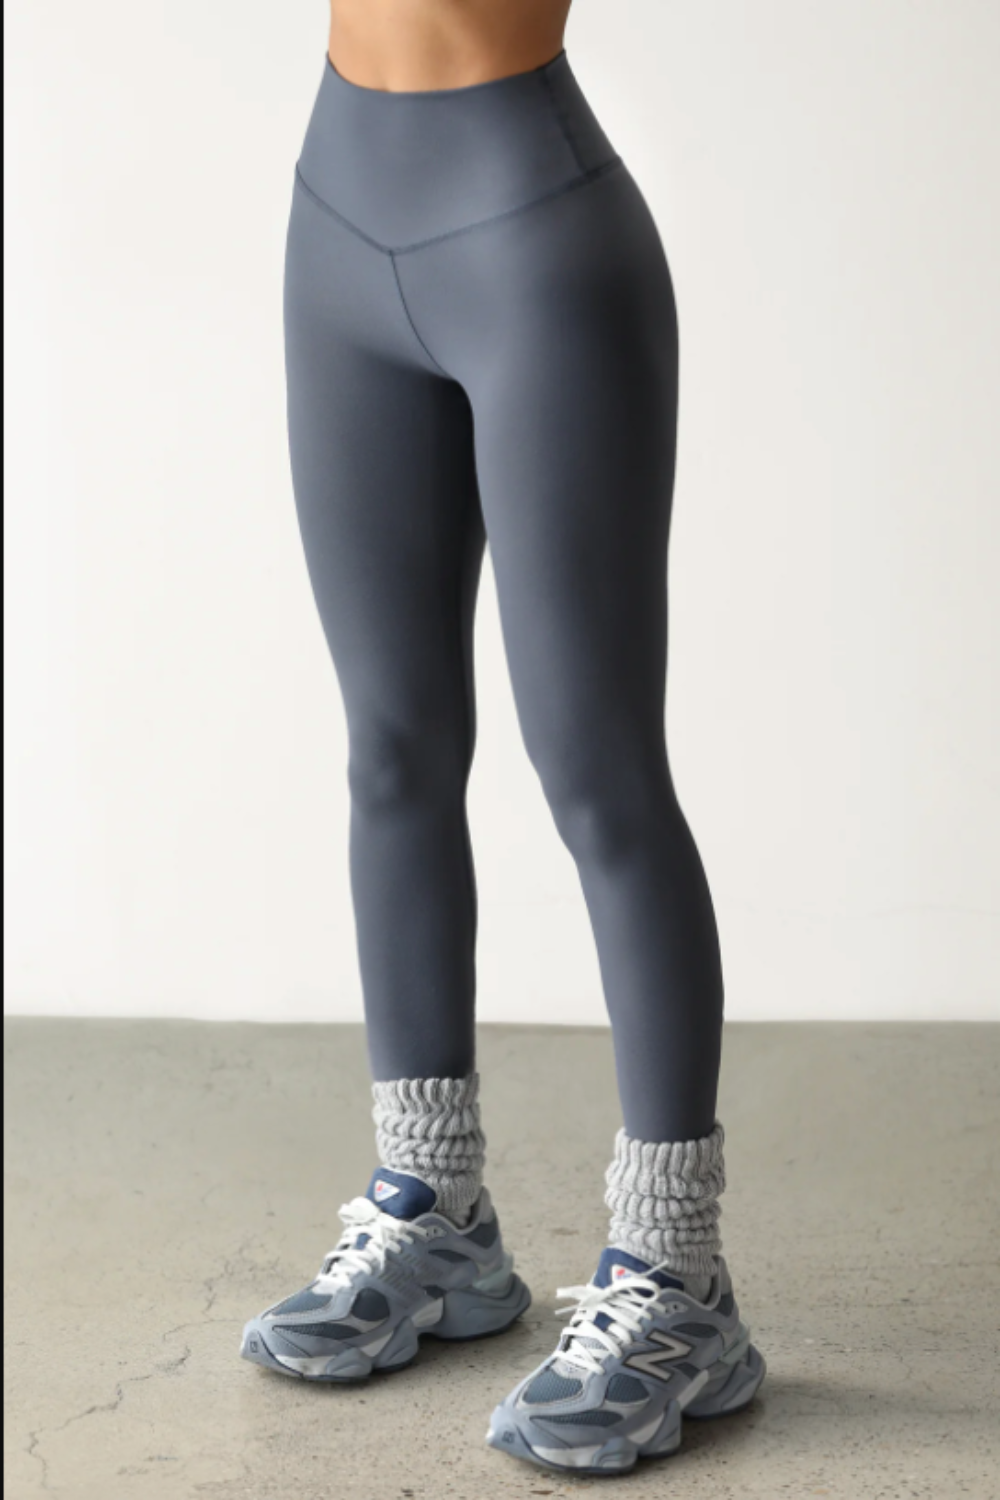 Lululemon Align Full Length Yoga Pants - Ecuador